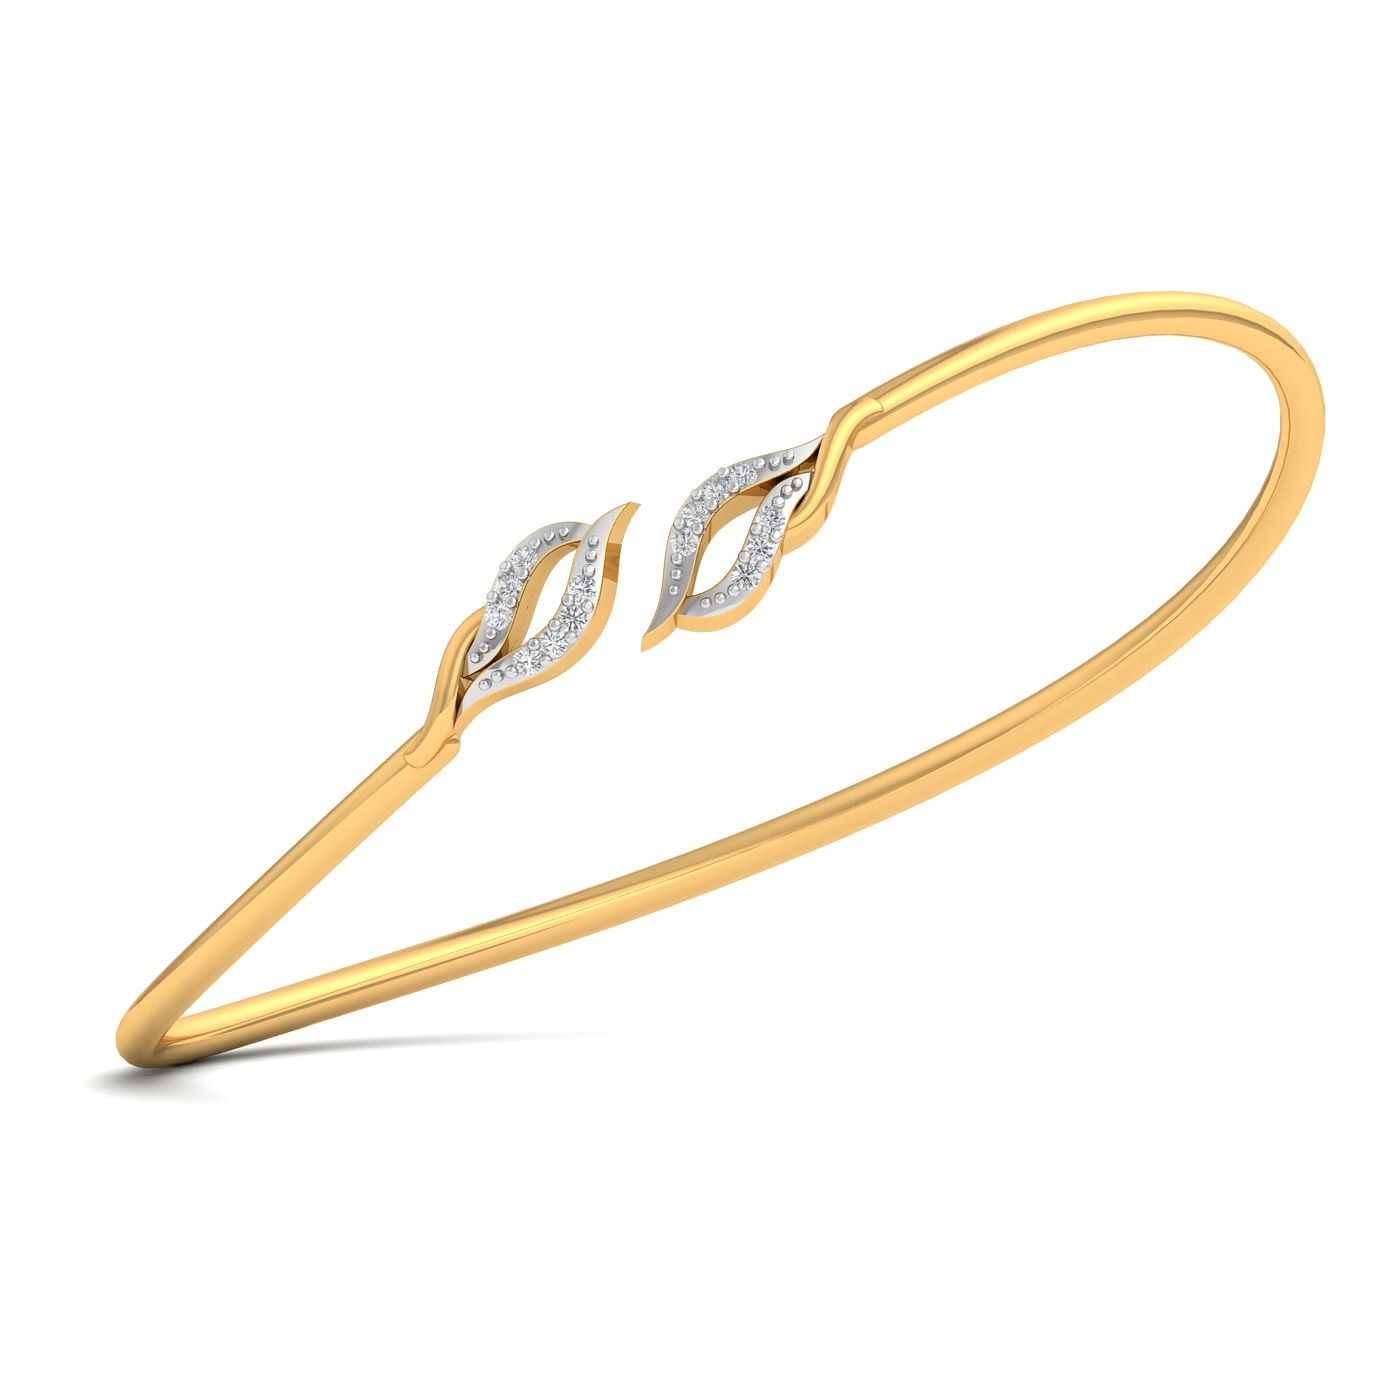 Olive Diamond Bracelet With Yellow Gold